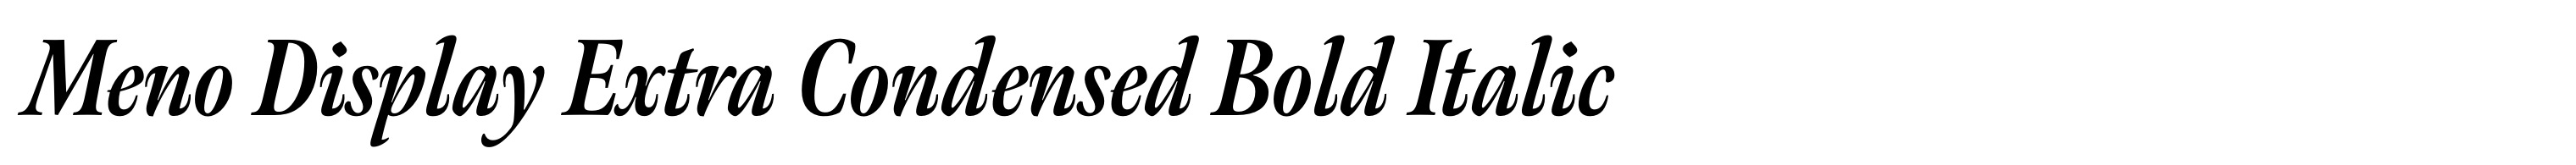 Meno Display Extra Condensed Bold Italic